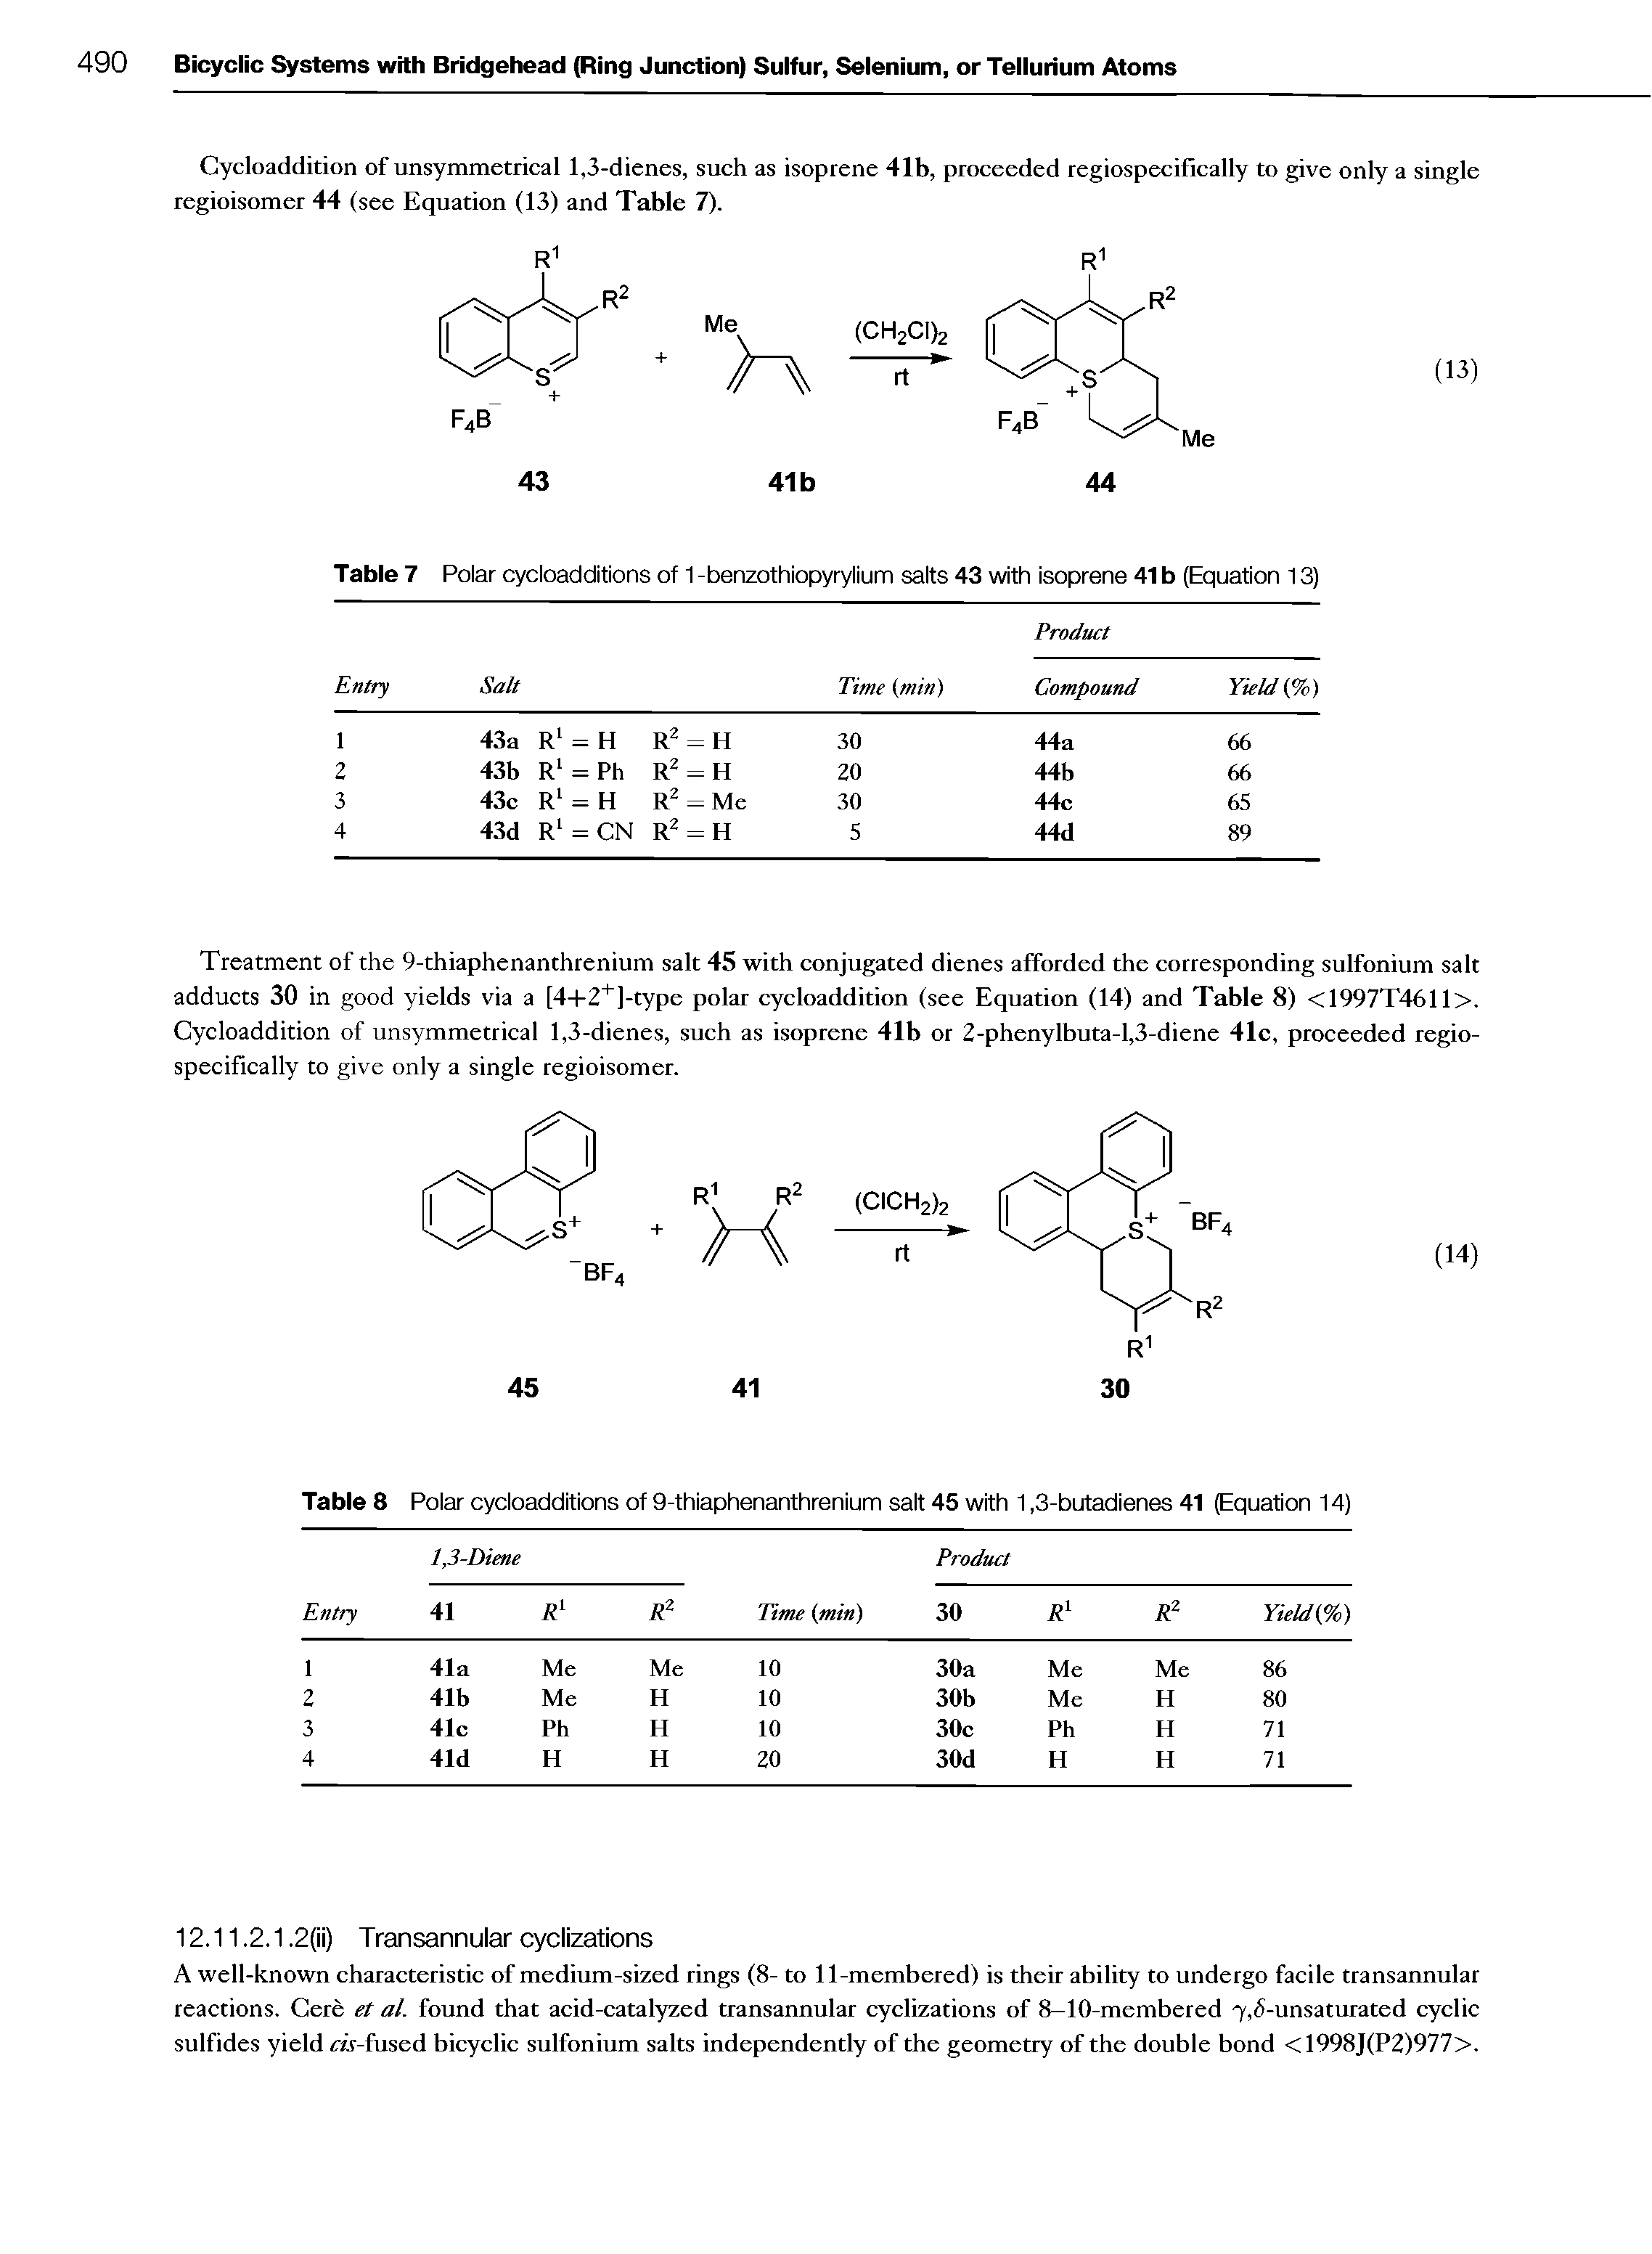 Table 7 Polar cycloadditions of 1 -benzothiopyrylium salts 43 with isoprene 41 b (Equation 13)...